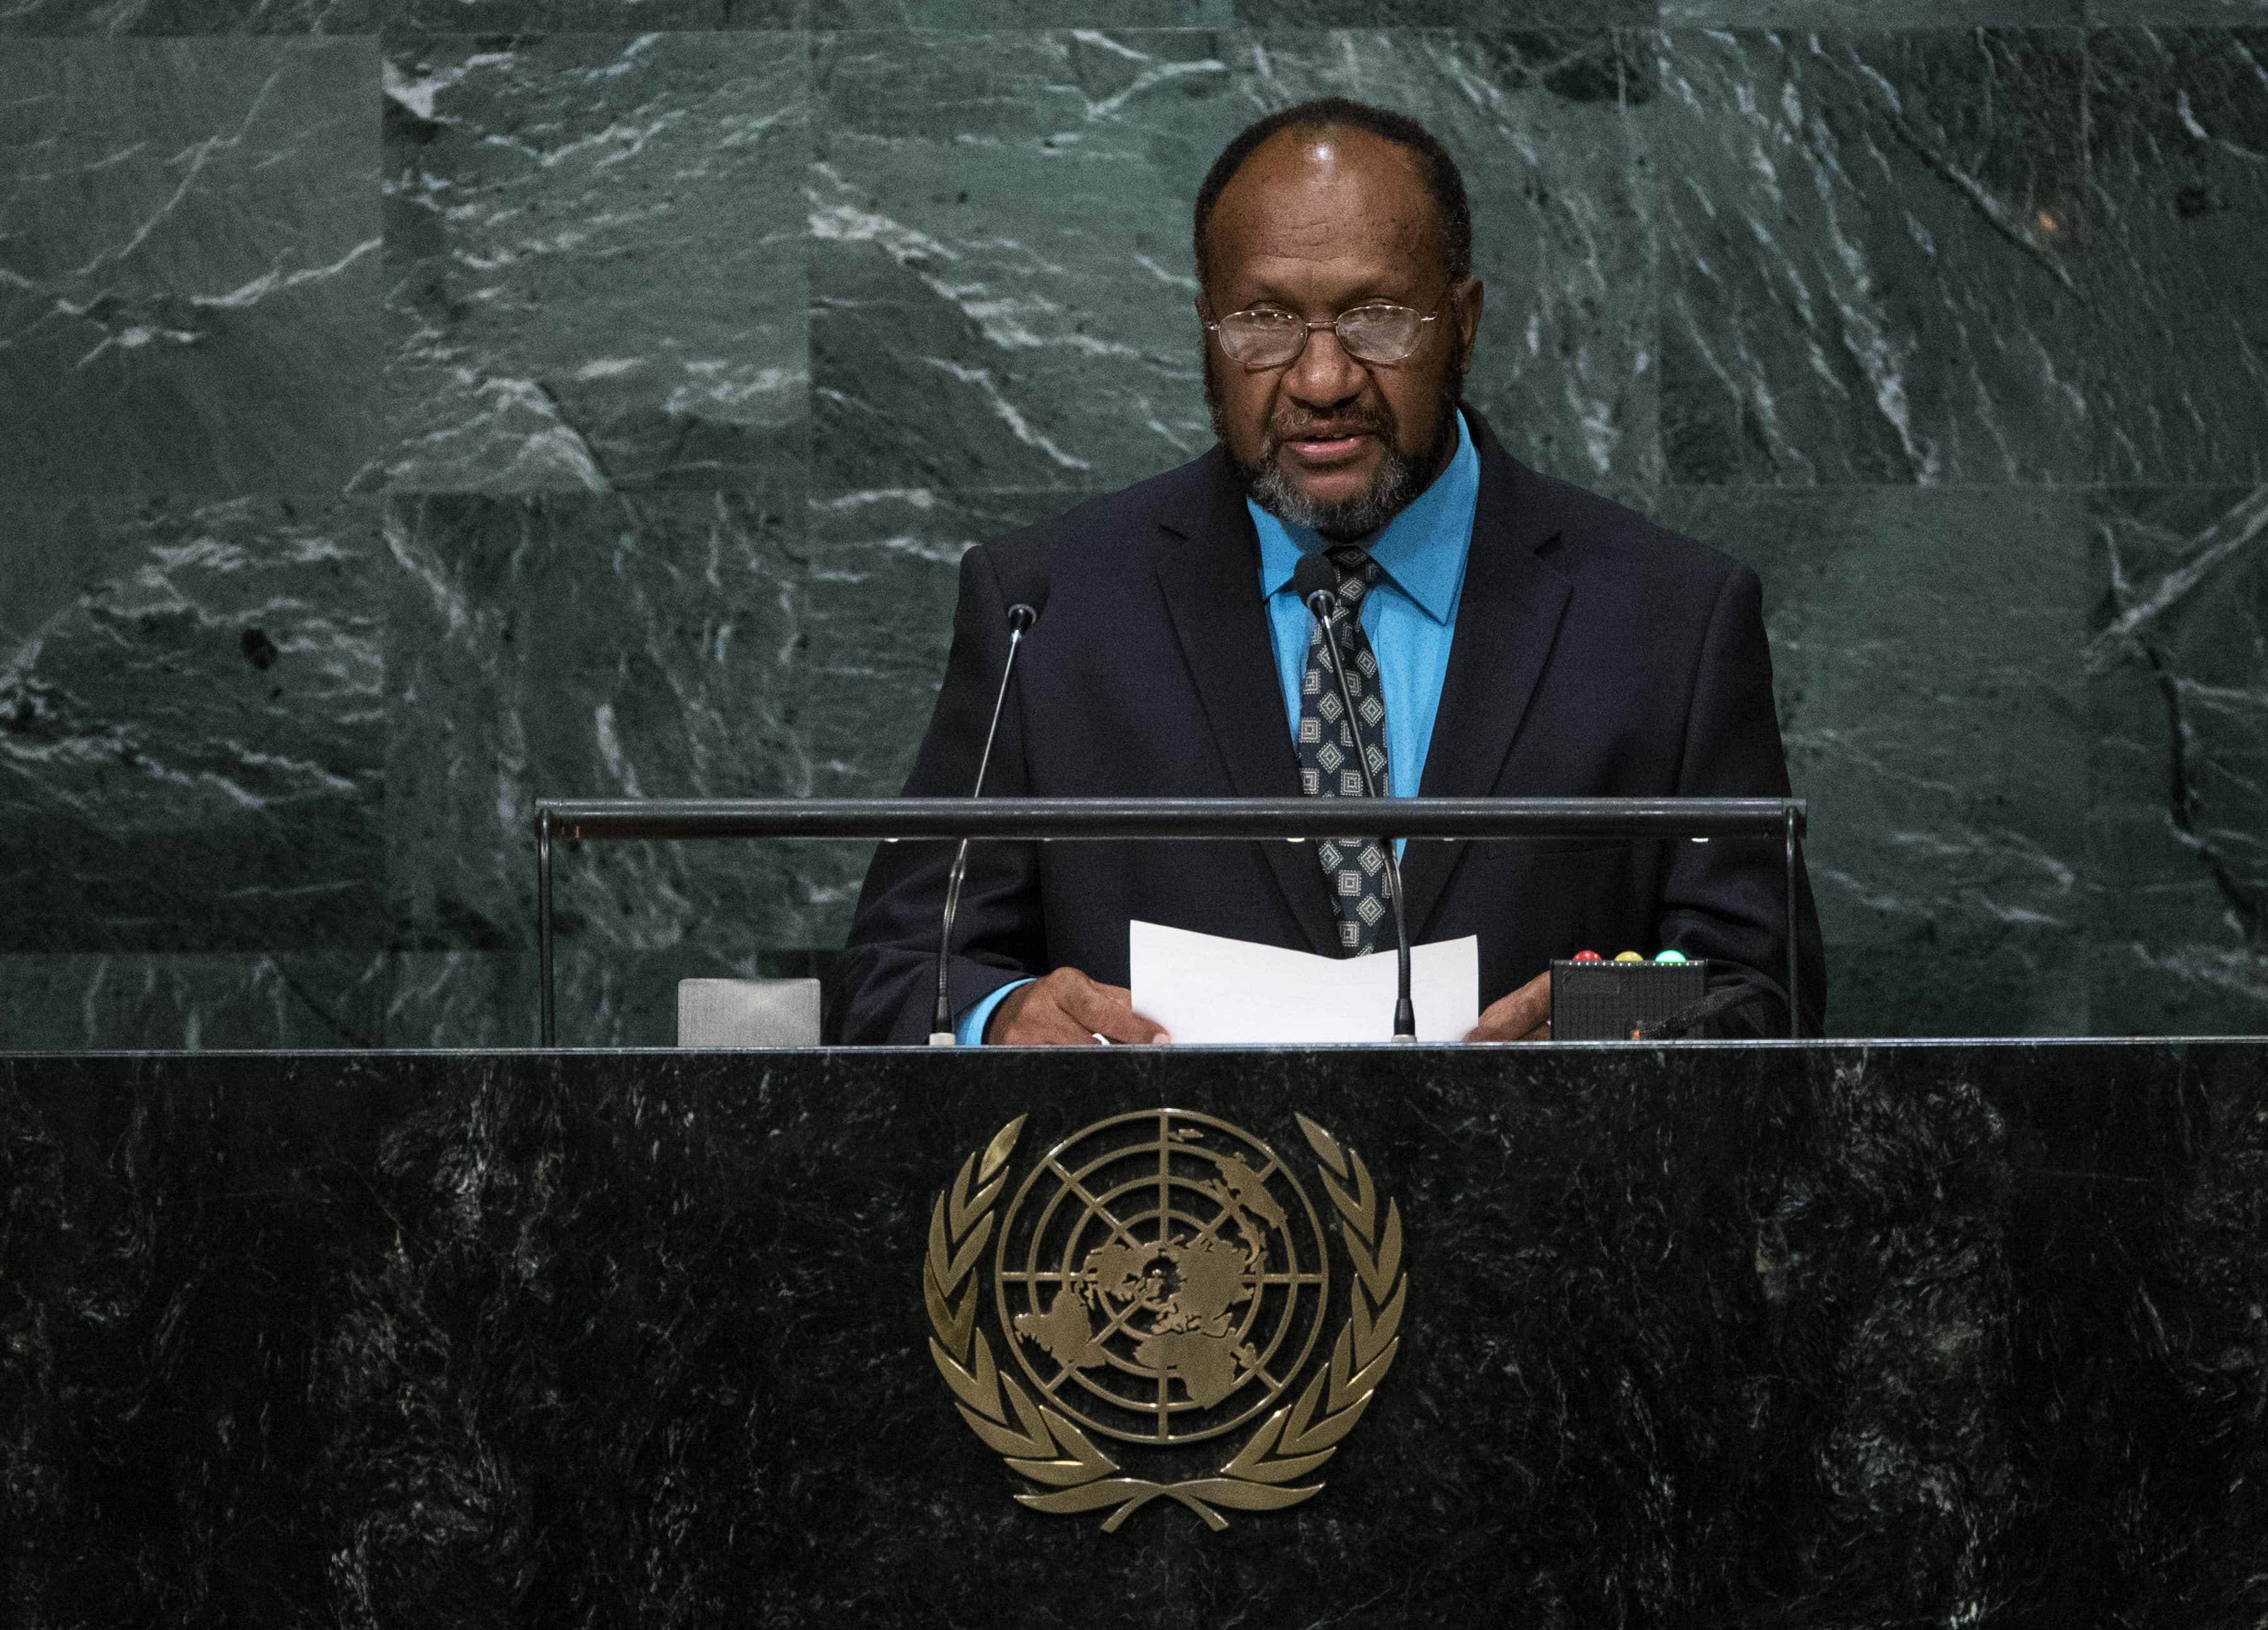 Vanuatu's Prime Minister Charlot Salwai Tabimasmas addresses the 71st session of the United Nations General Assembly, 23 September 2016., Craig Ruttle, AP